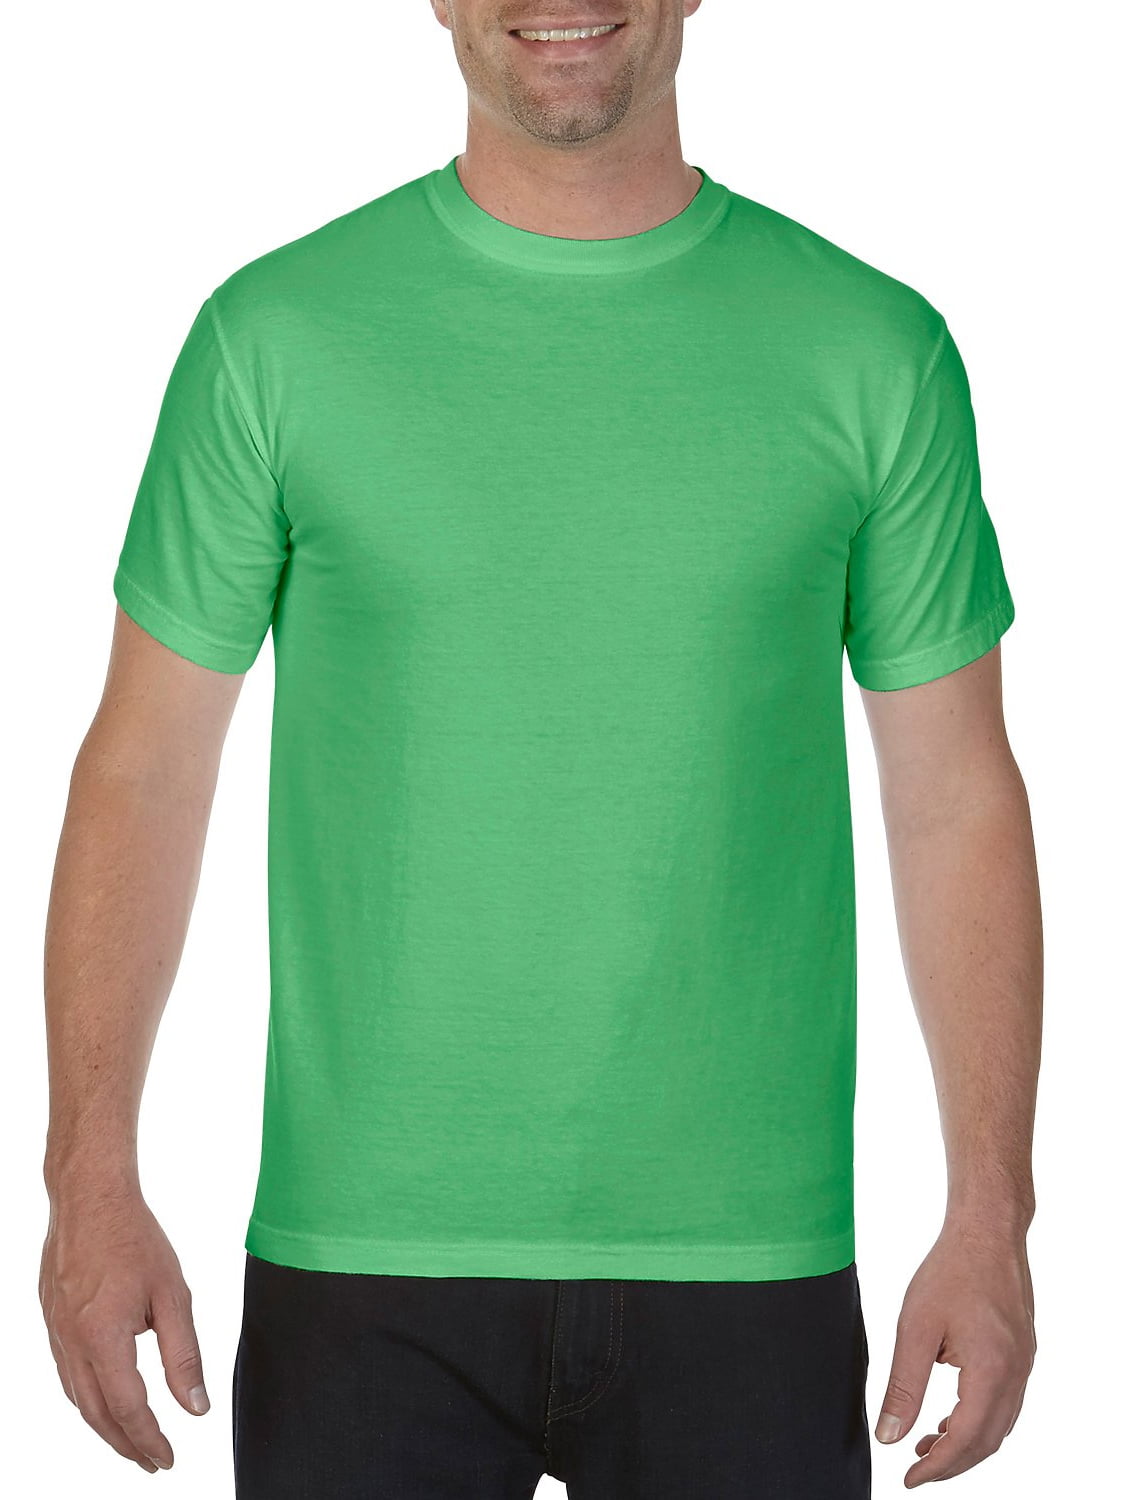 COMFORT COLORS - Comfort Colors Ring Spun Garment Dyed T-Shirt, Neon ...